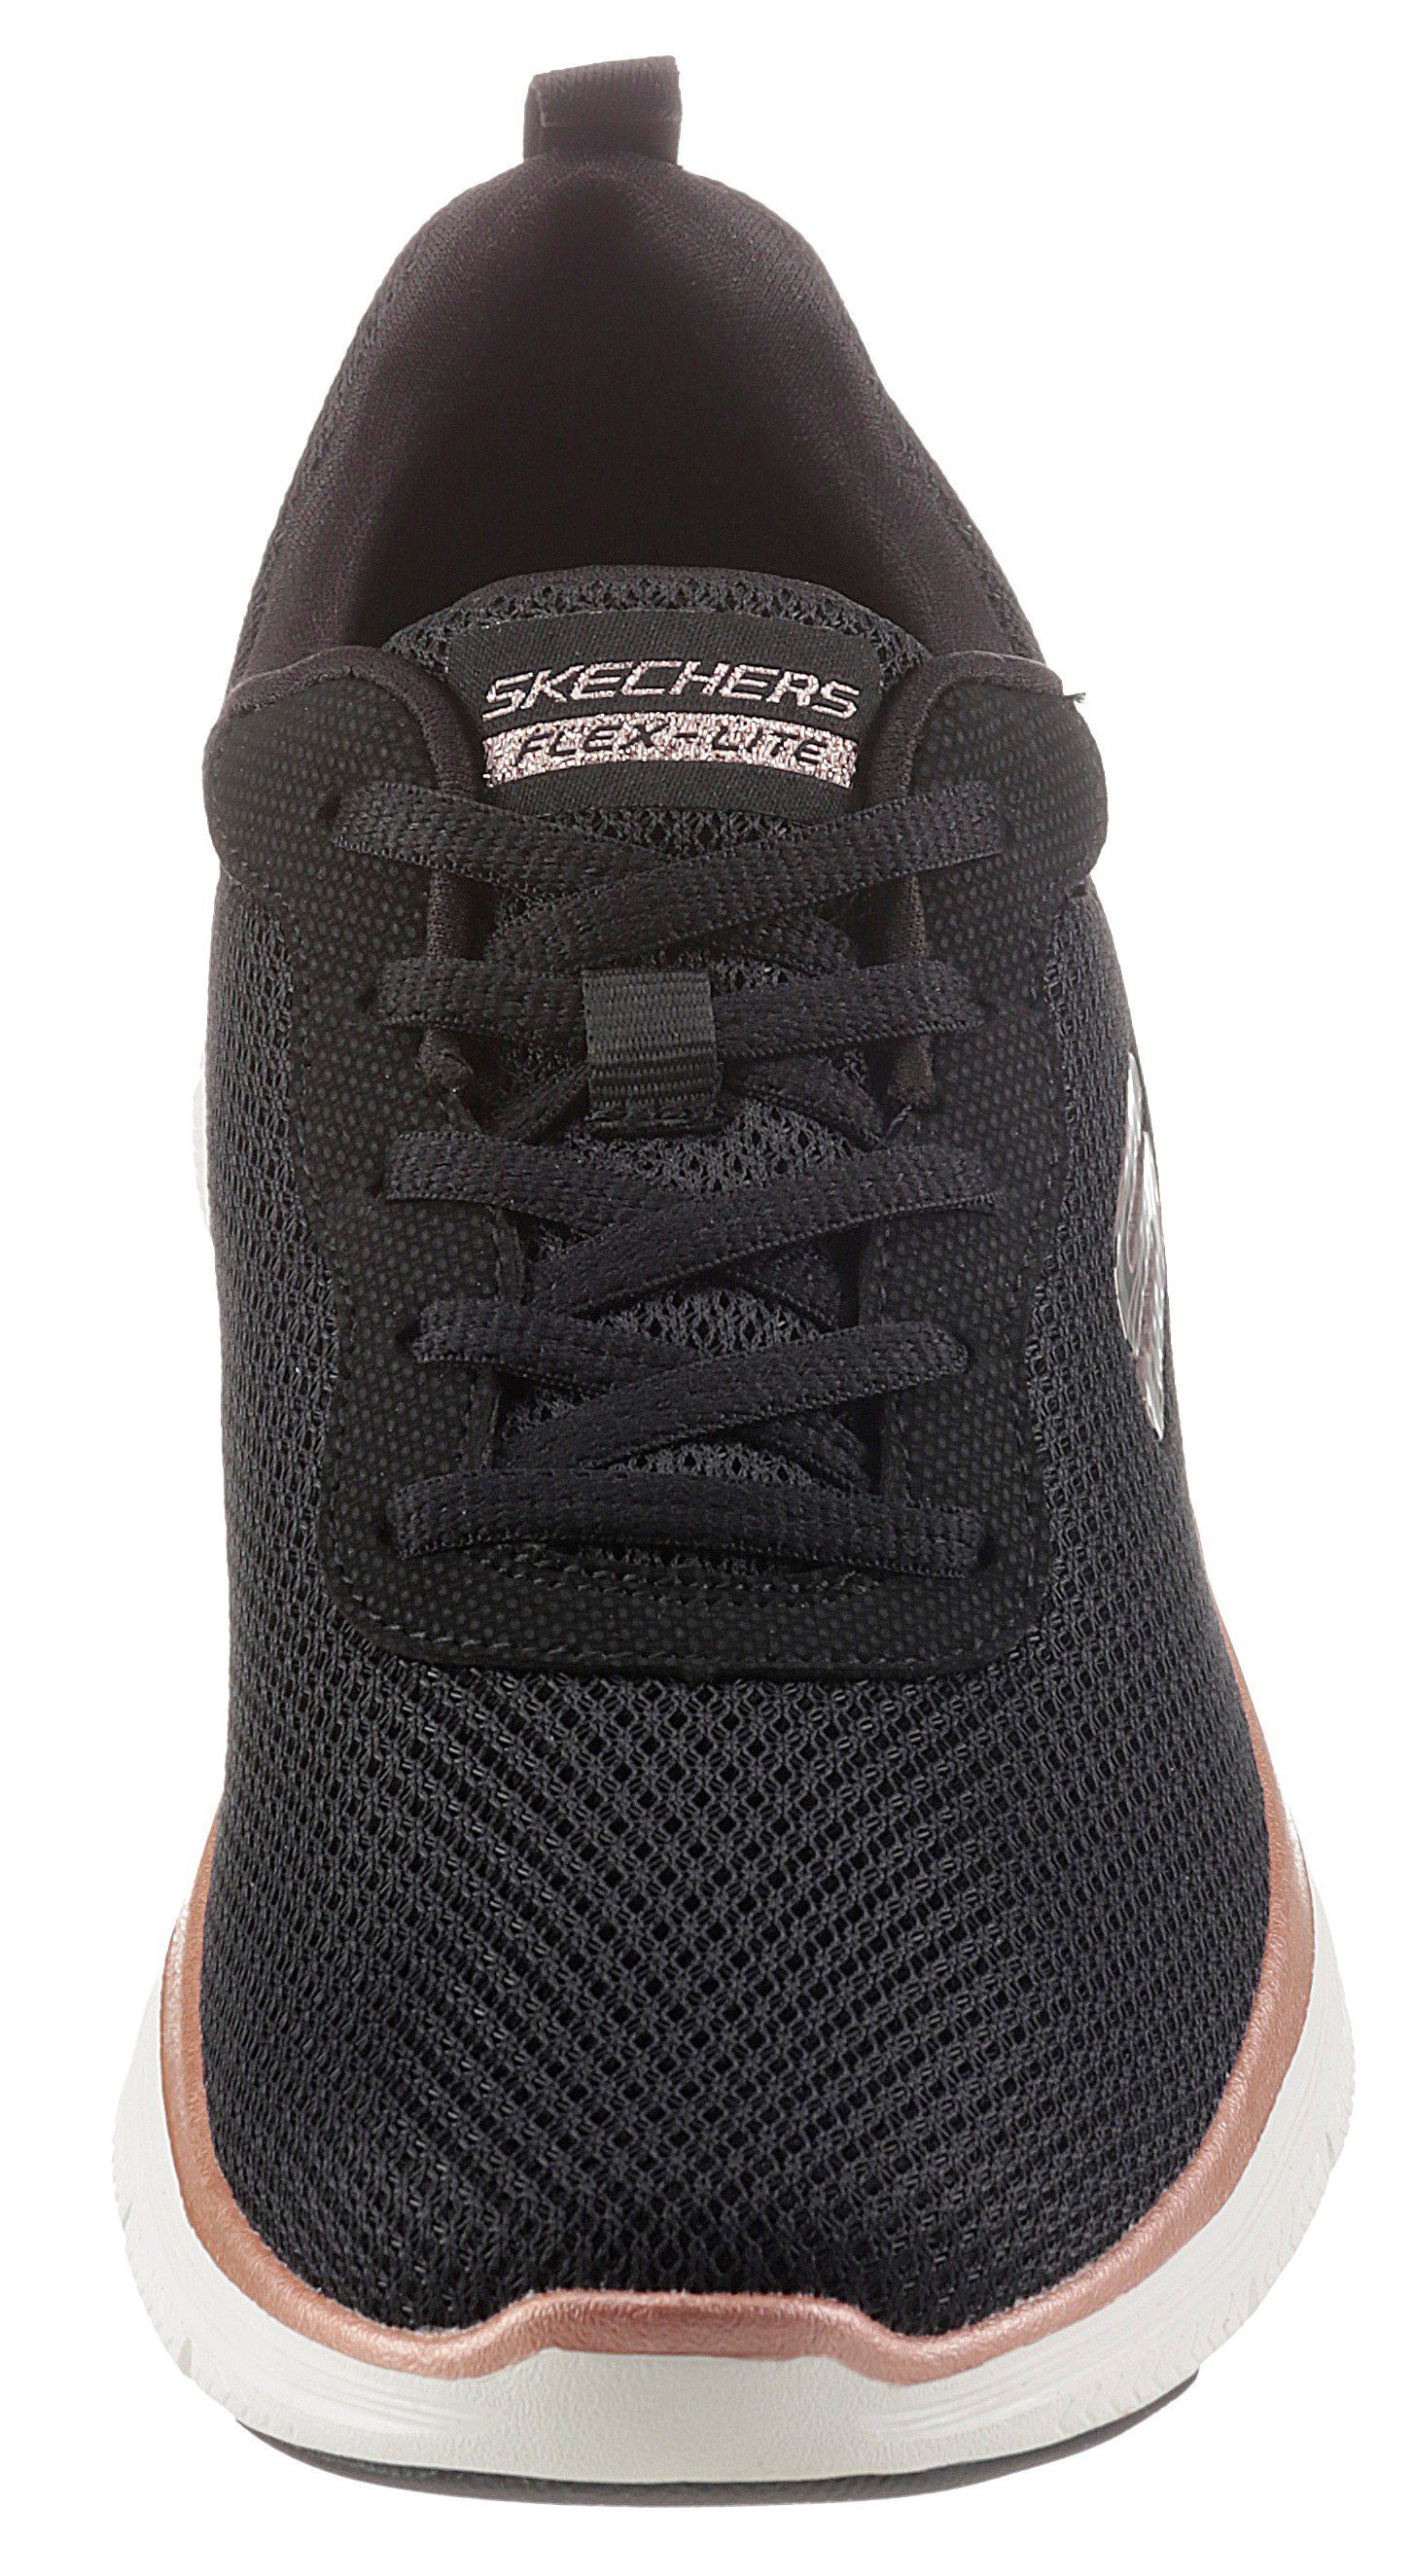 Skechers FLEX APPEAL 4.0 mit BRILLINAT Ausstattung VIEW Sneaker Air-Cooled schwarz-rosé Memory Foam